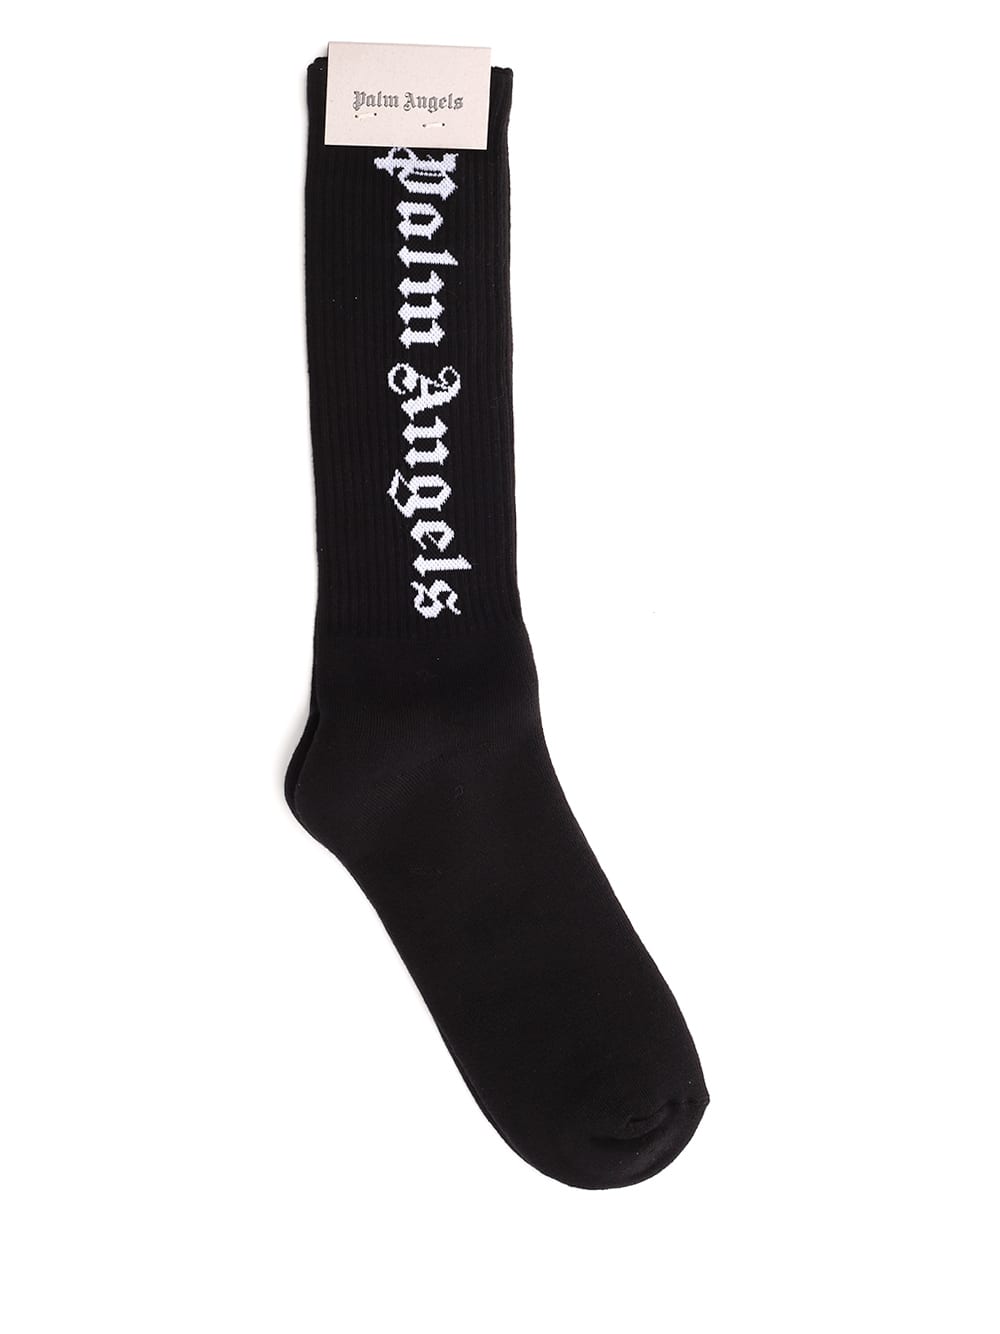 Shop Palm Angels Black Socks